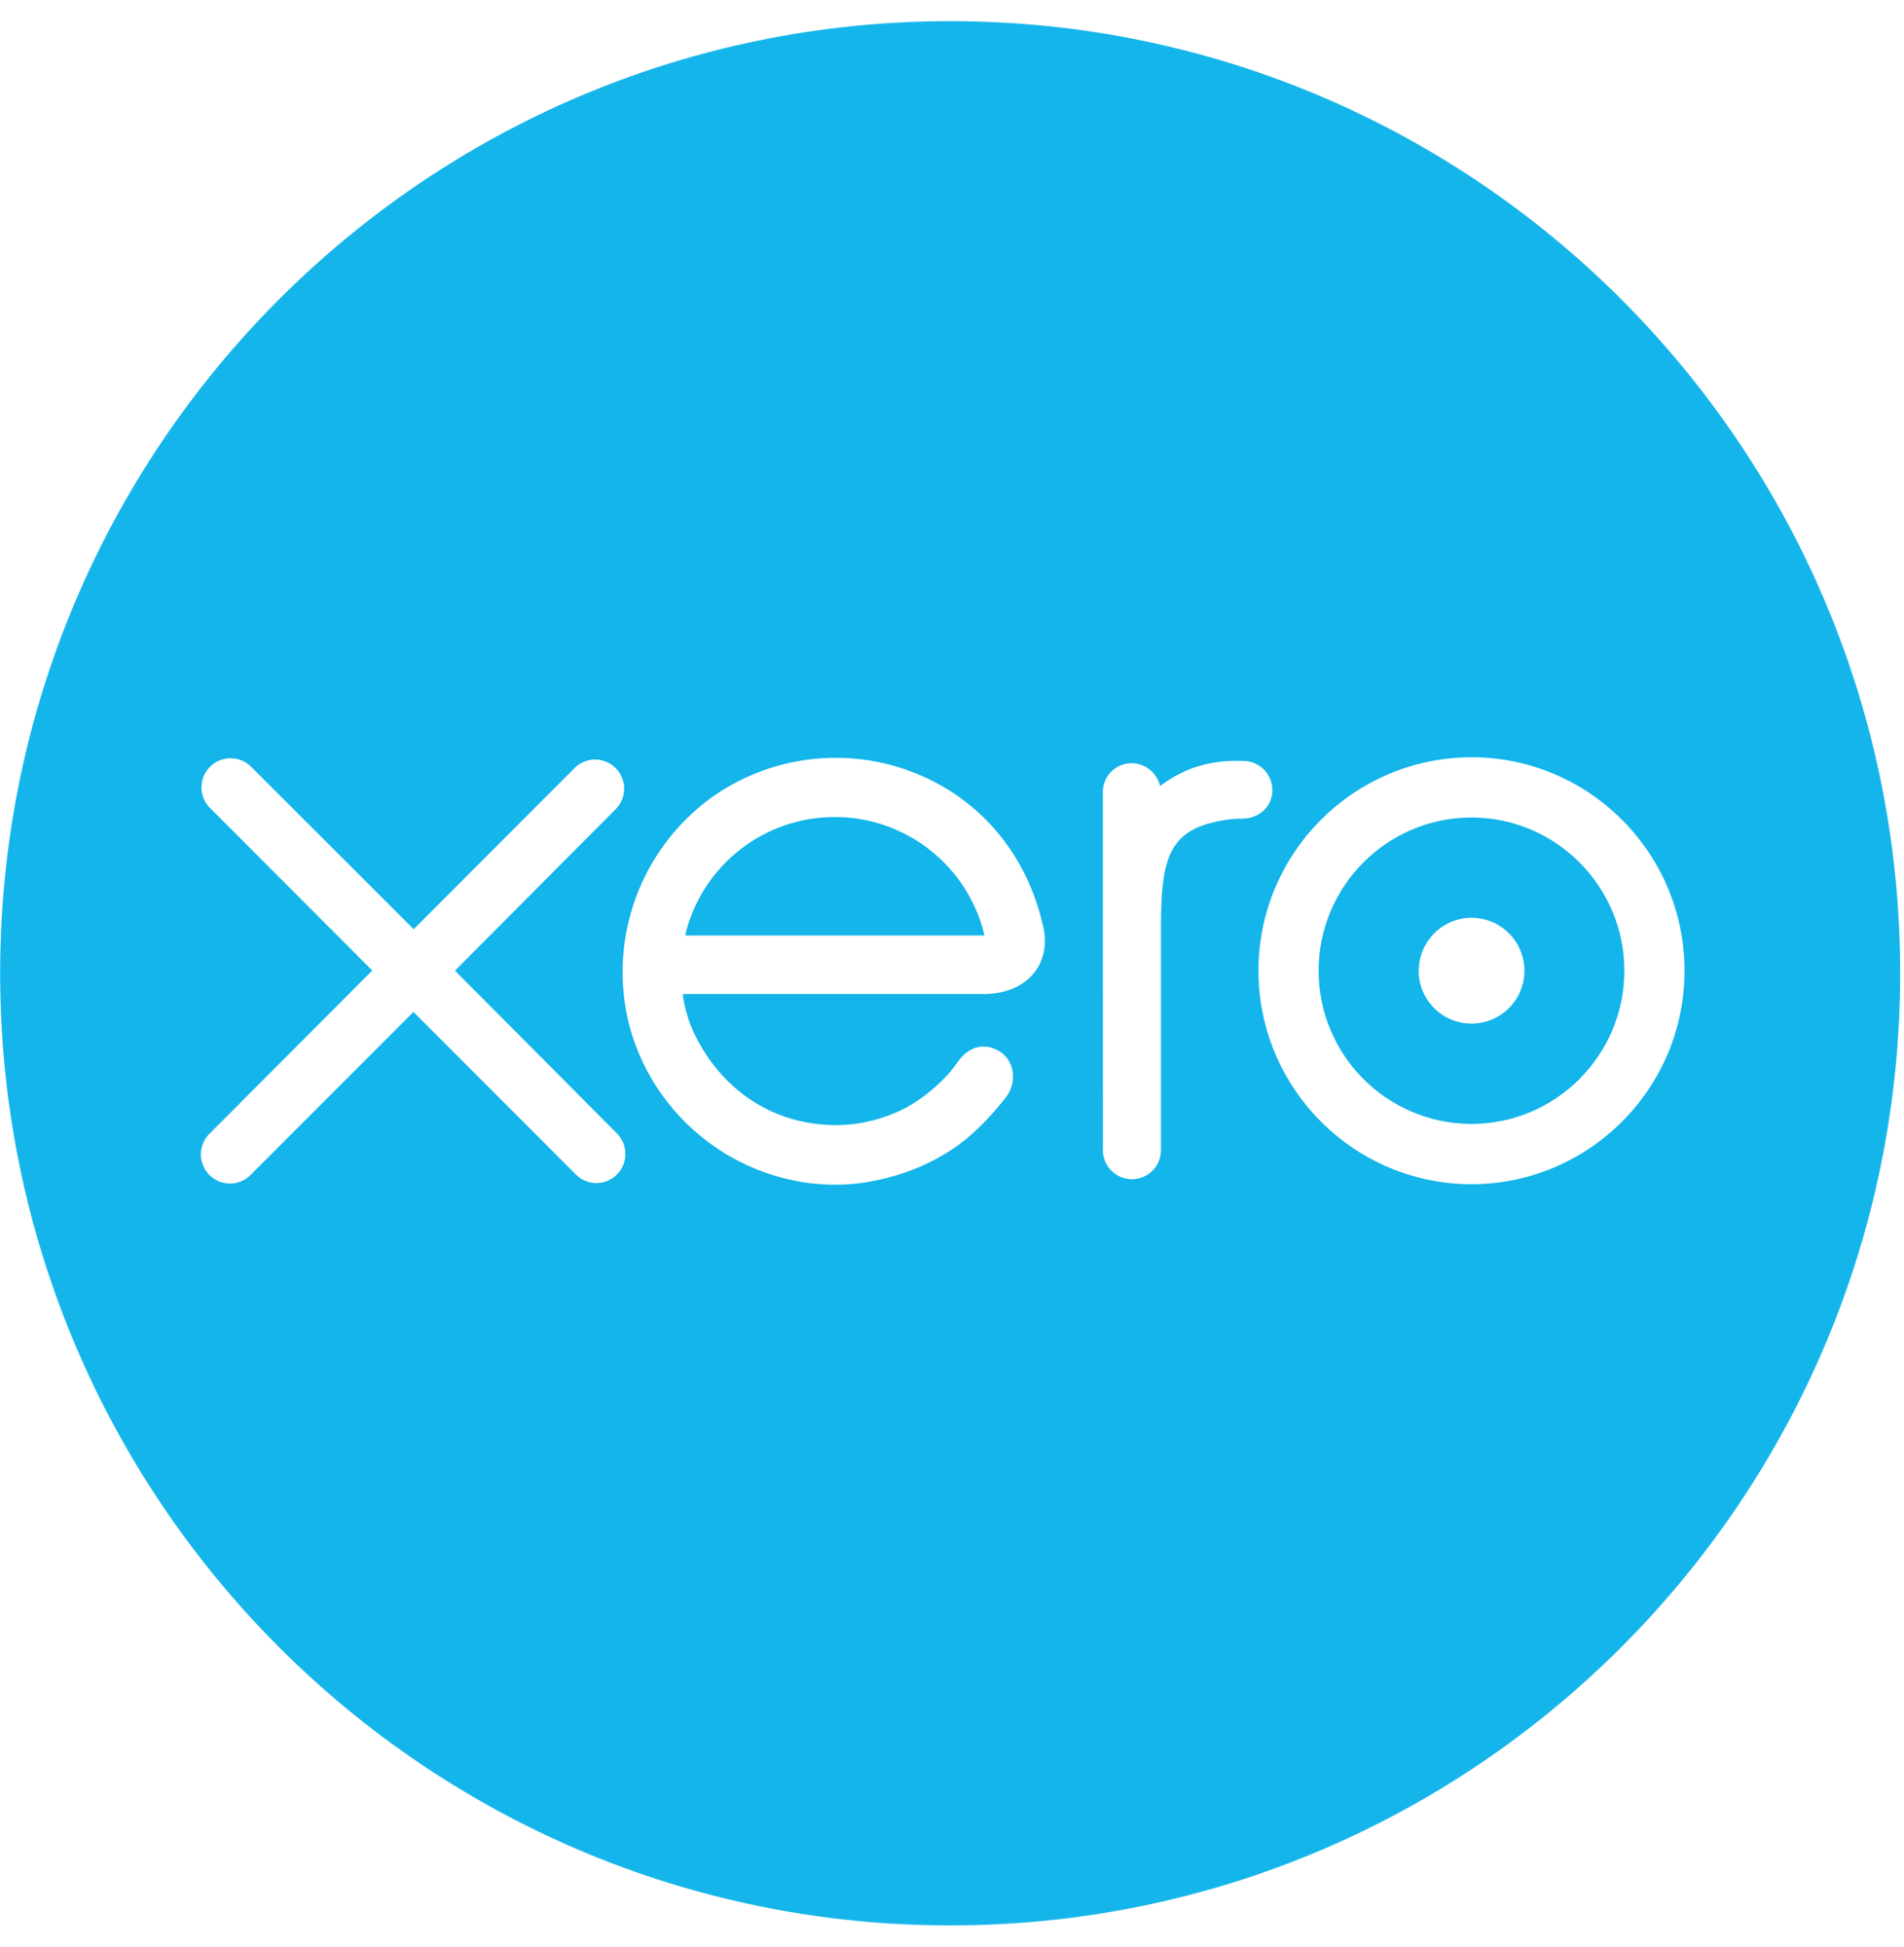 xero-logo-png-transparent